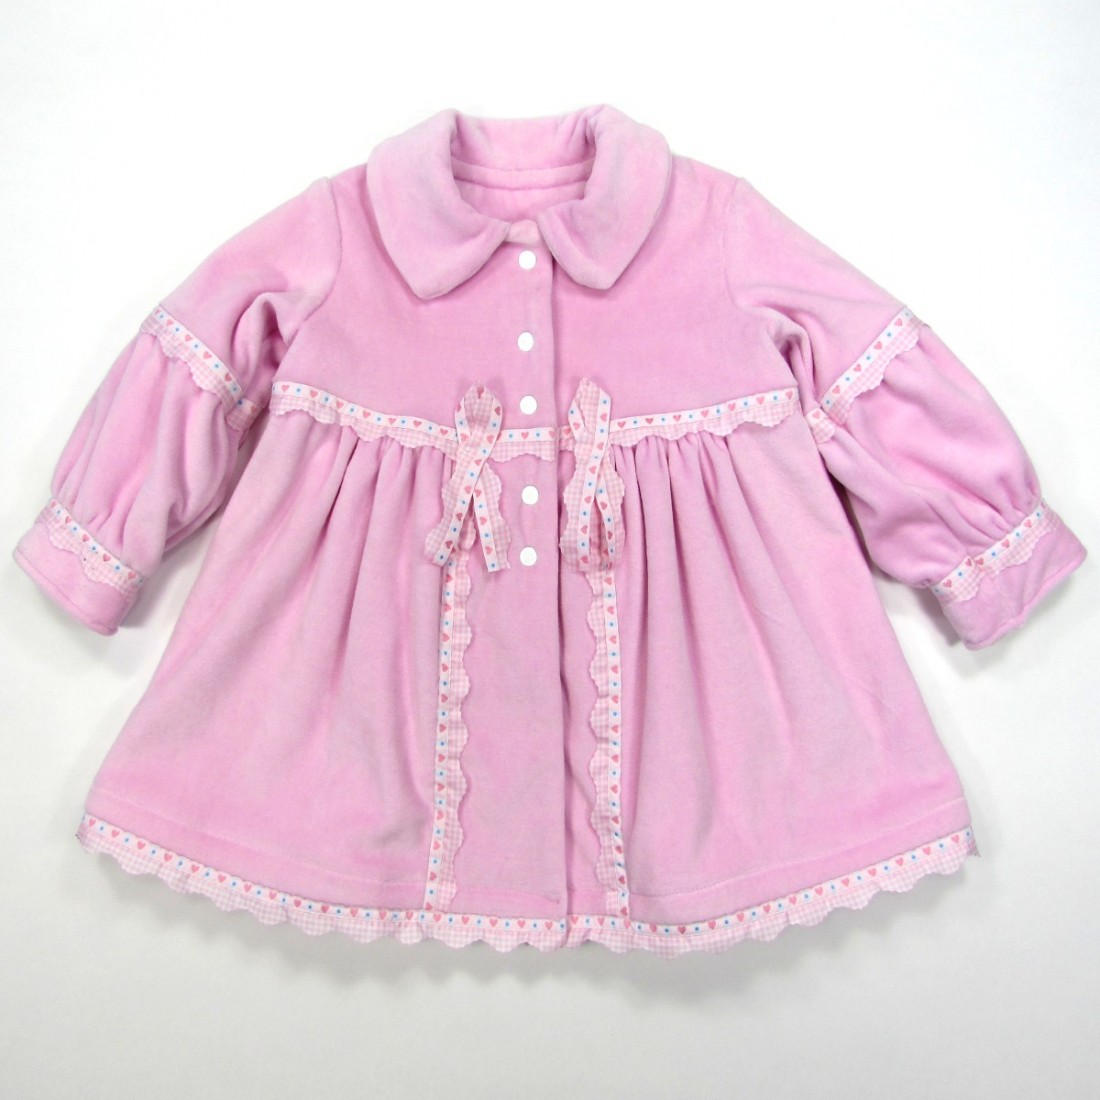 Manteau chic bébé fille 9 mois velours rose bebe reveur handmade